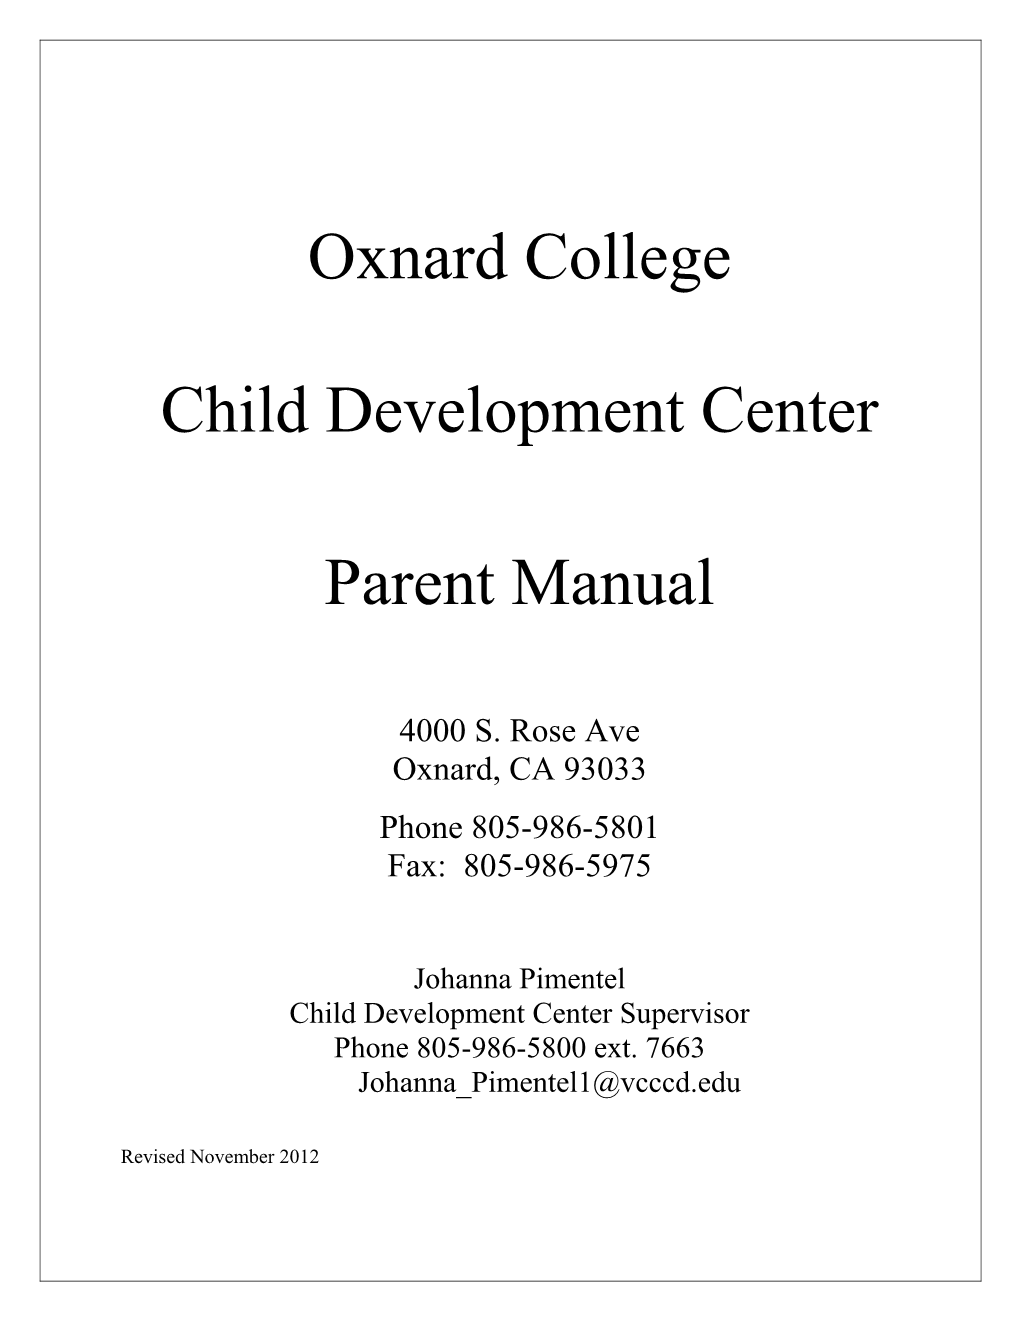 Oxnard College Child Development Center Program Philosophy